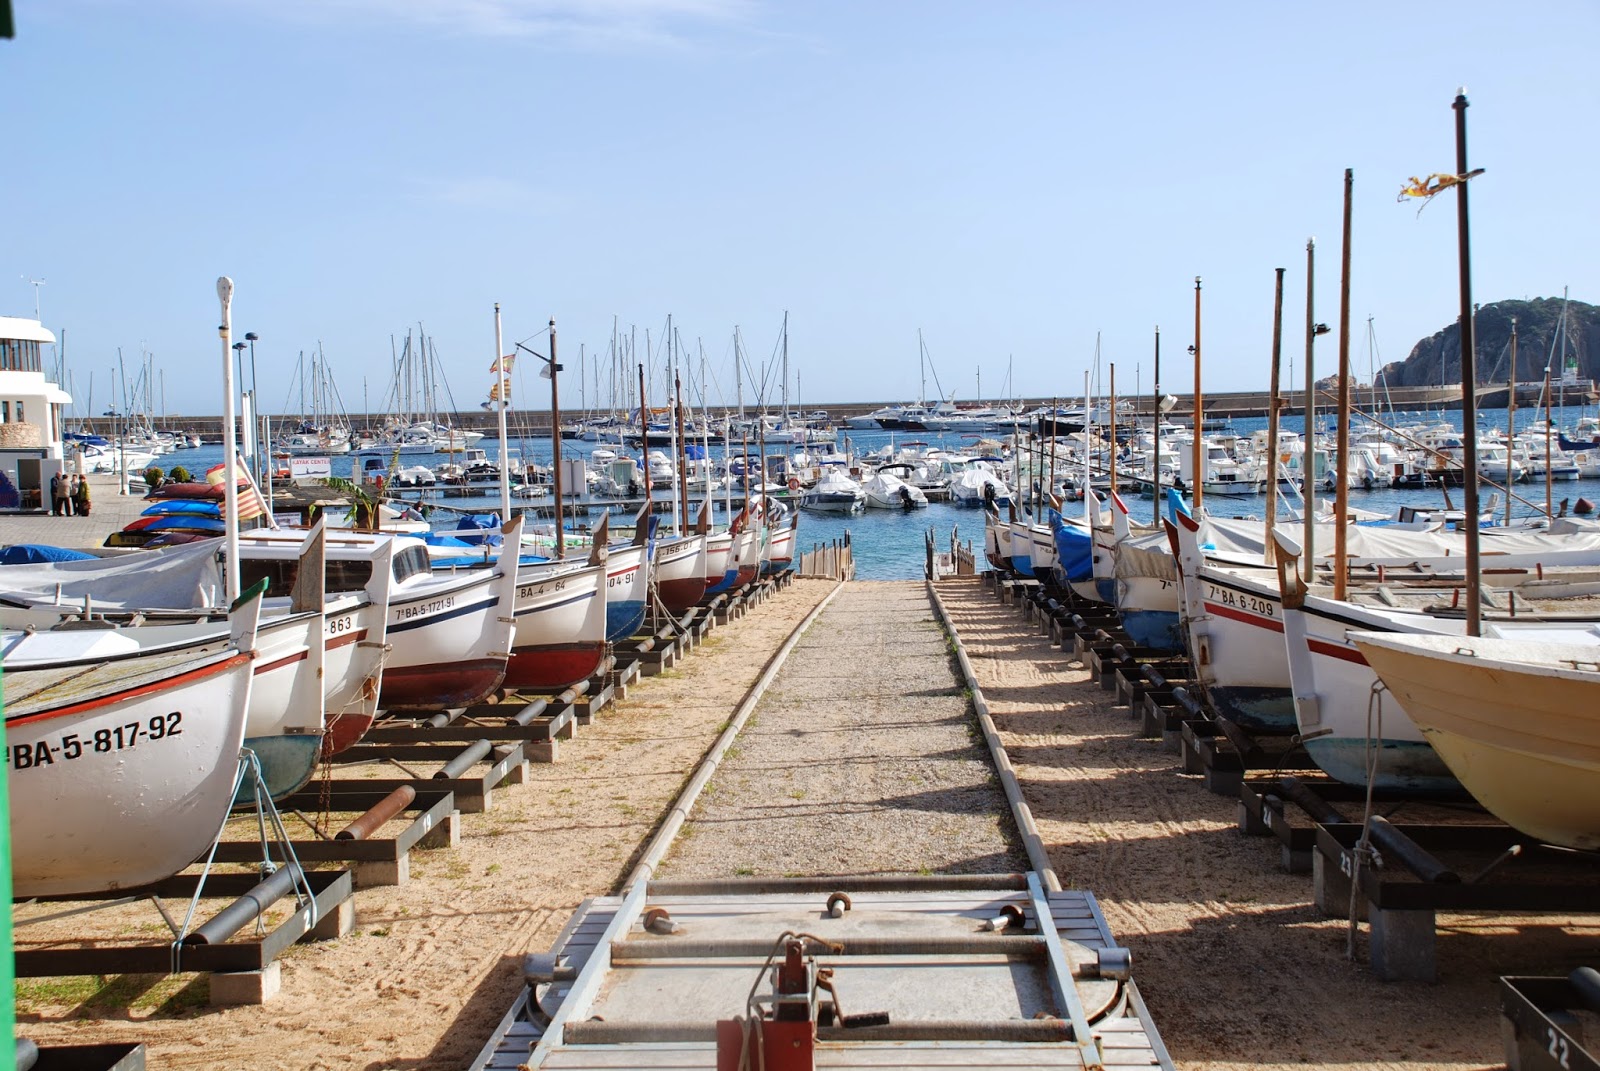 Boats on the beach, Sant Feliu de Guíxols, Catalonia